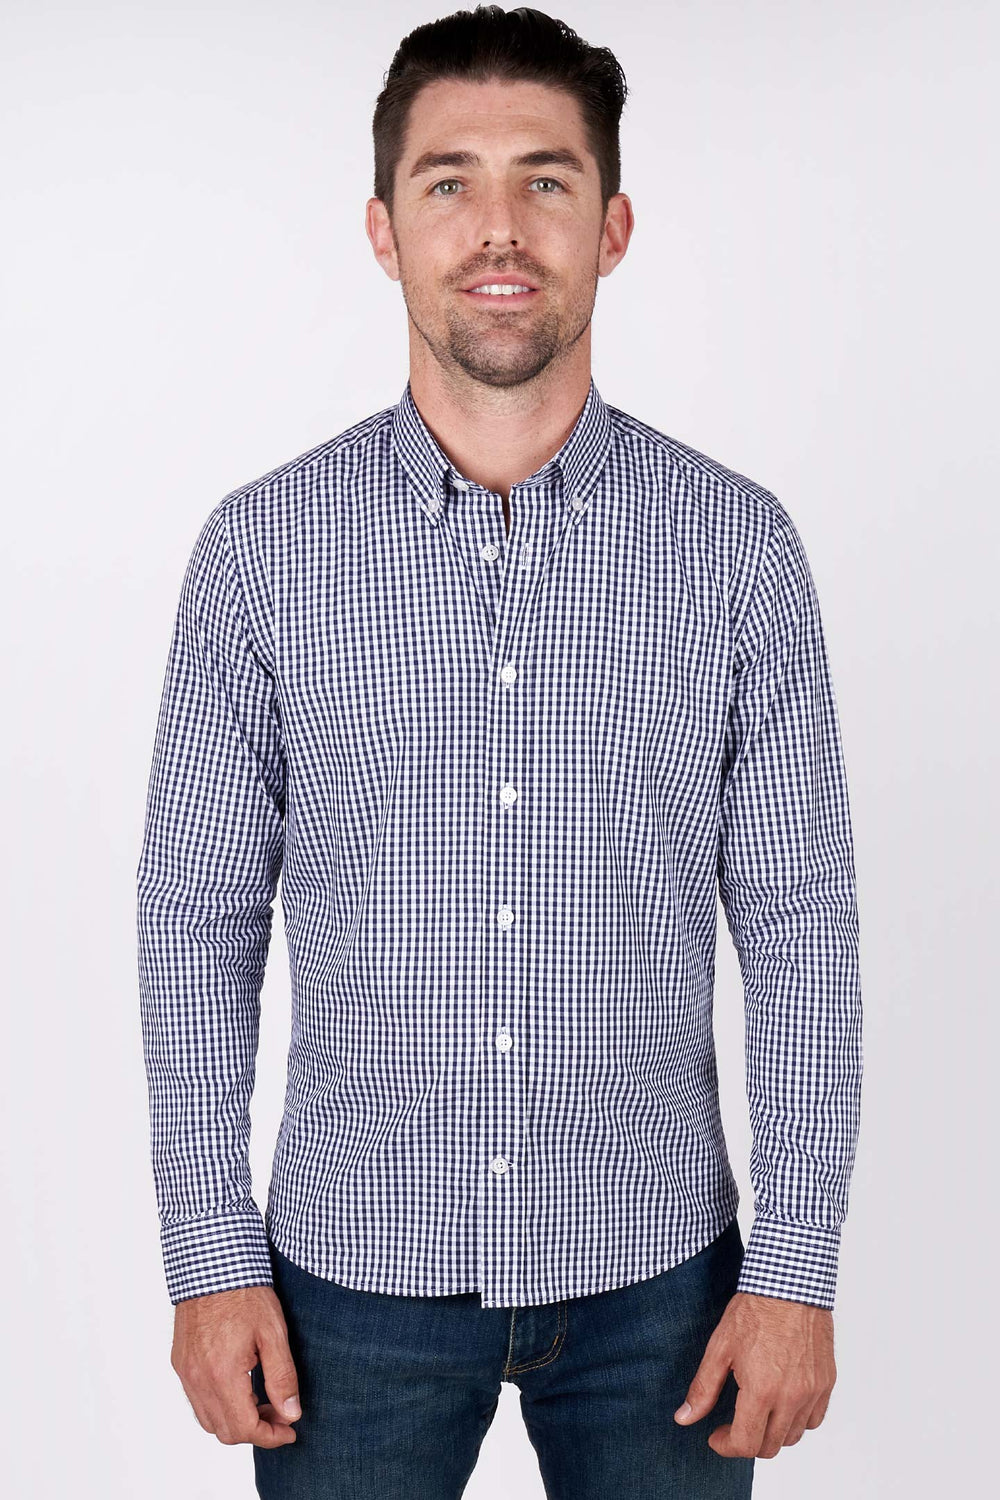 Buy Navy Gingham Button-Down Shirt for Short Men | Ash & Erie   Everyday Shirts